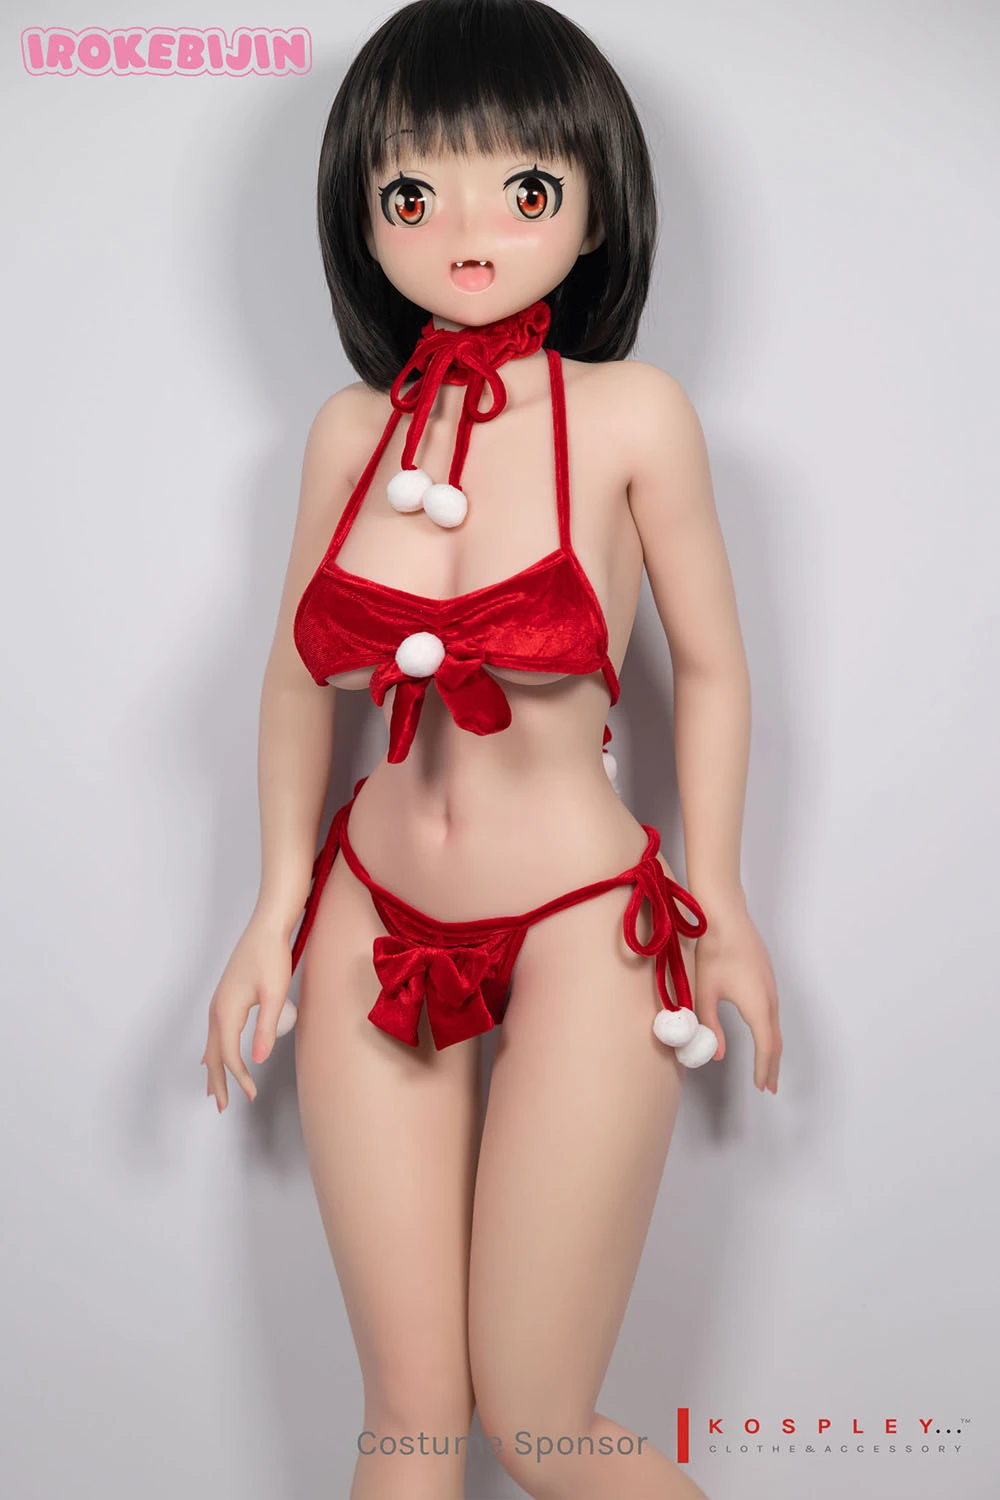 Anime face shape silicone doll